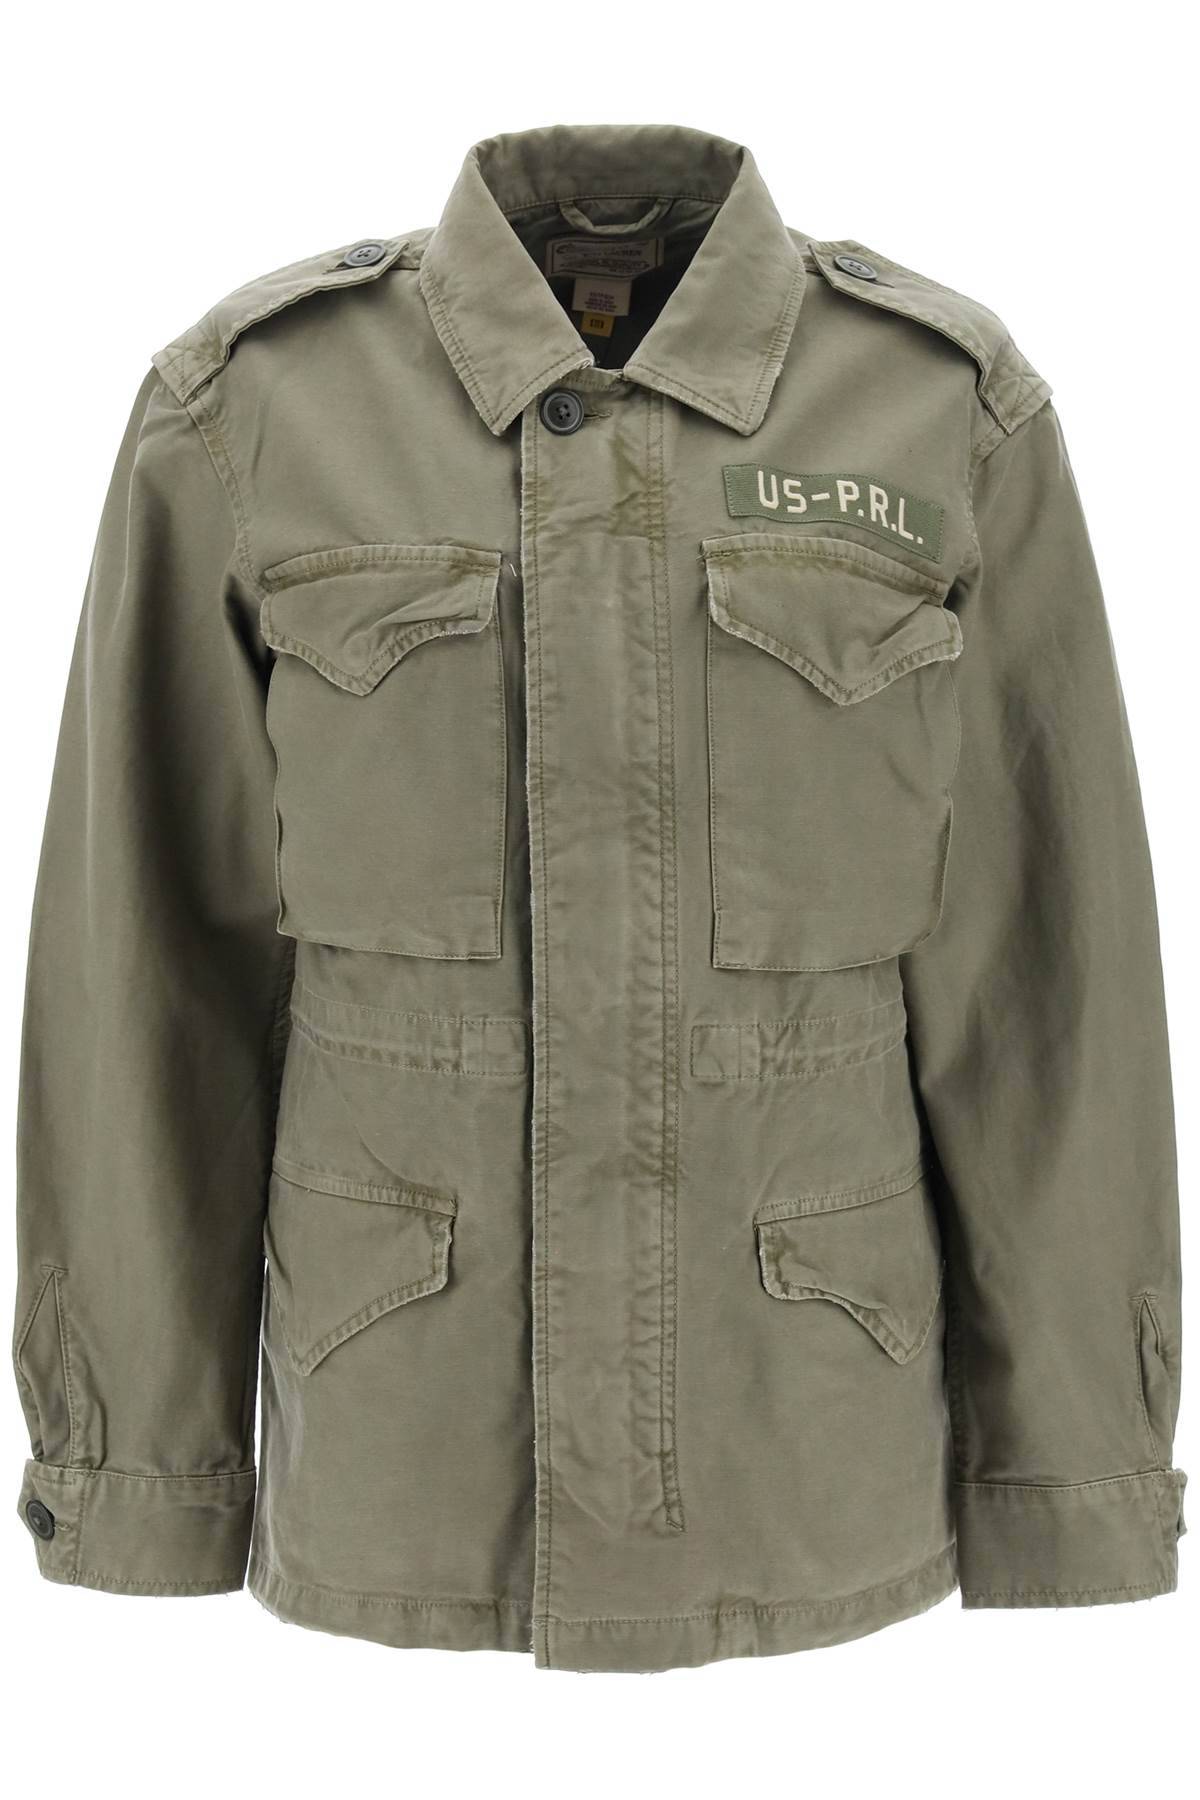 POLO RALPH LAUREN cotton military jacket